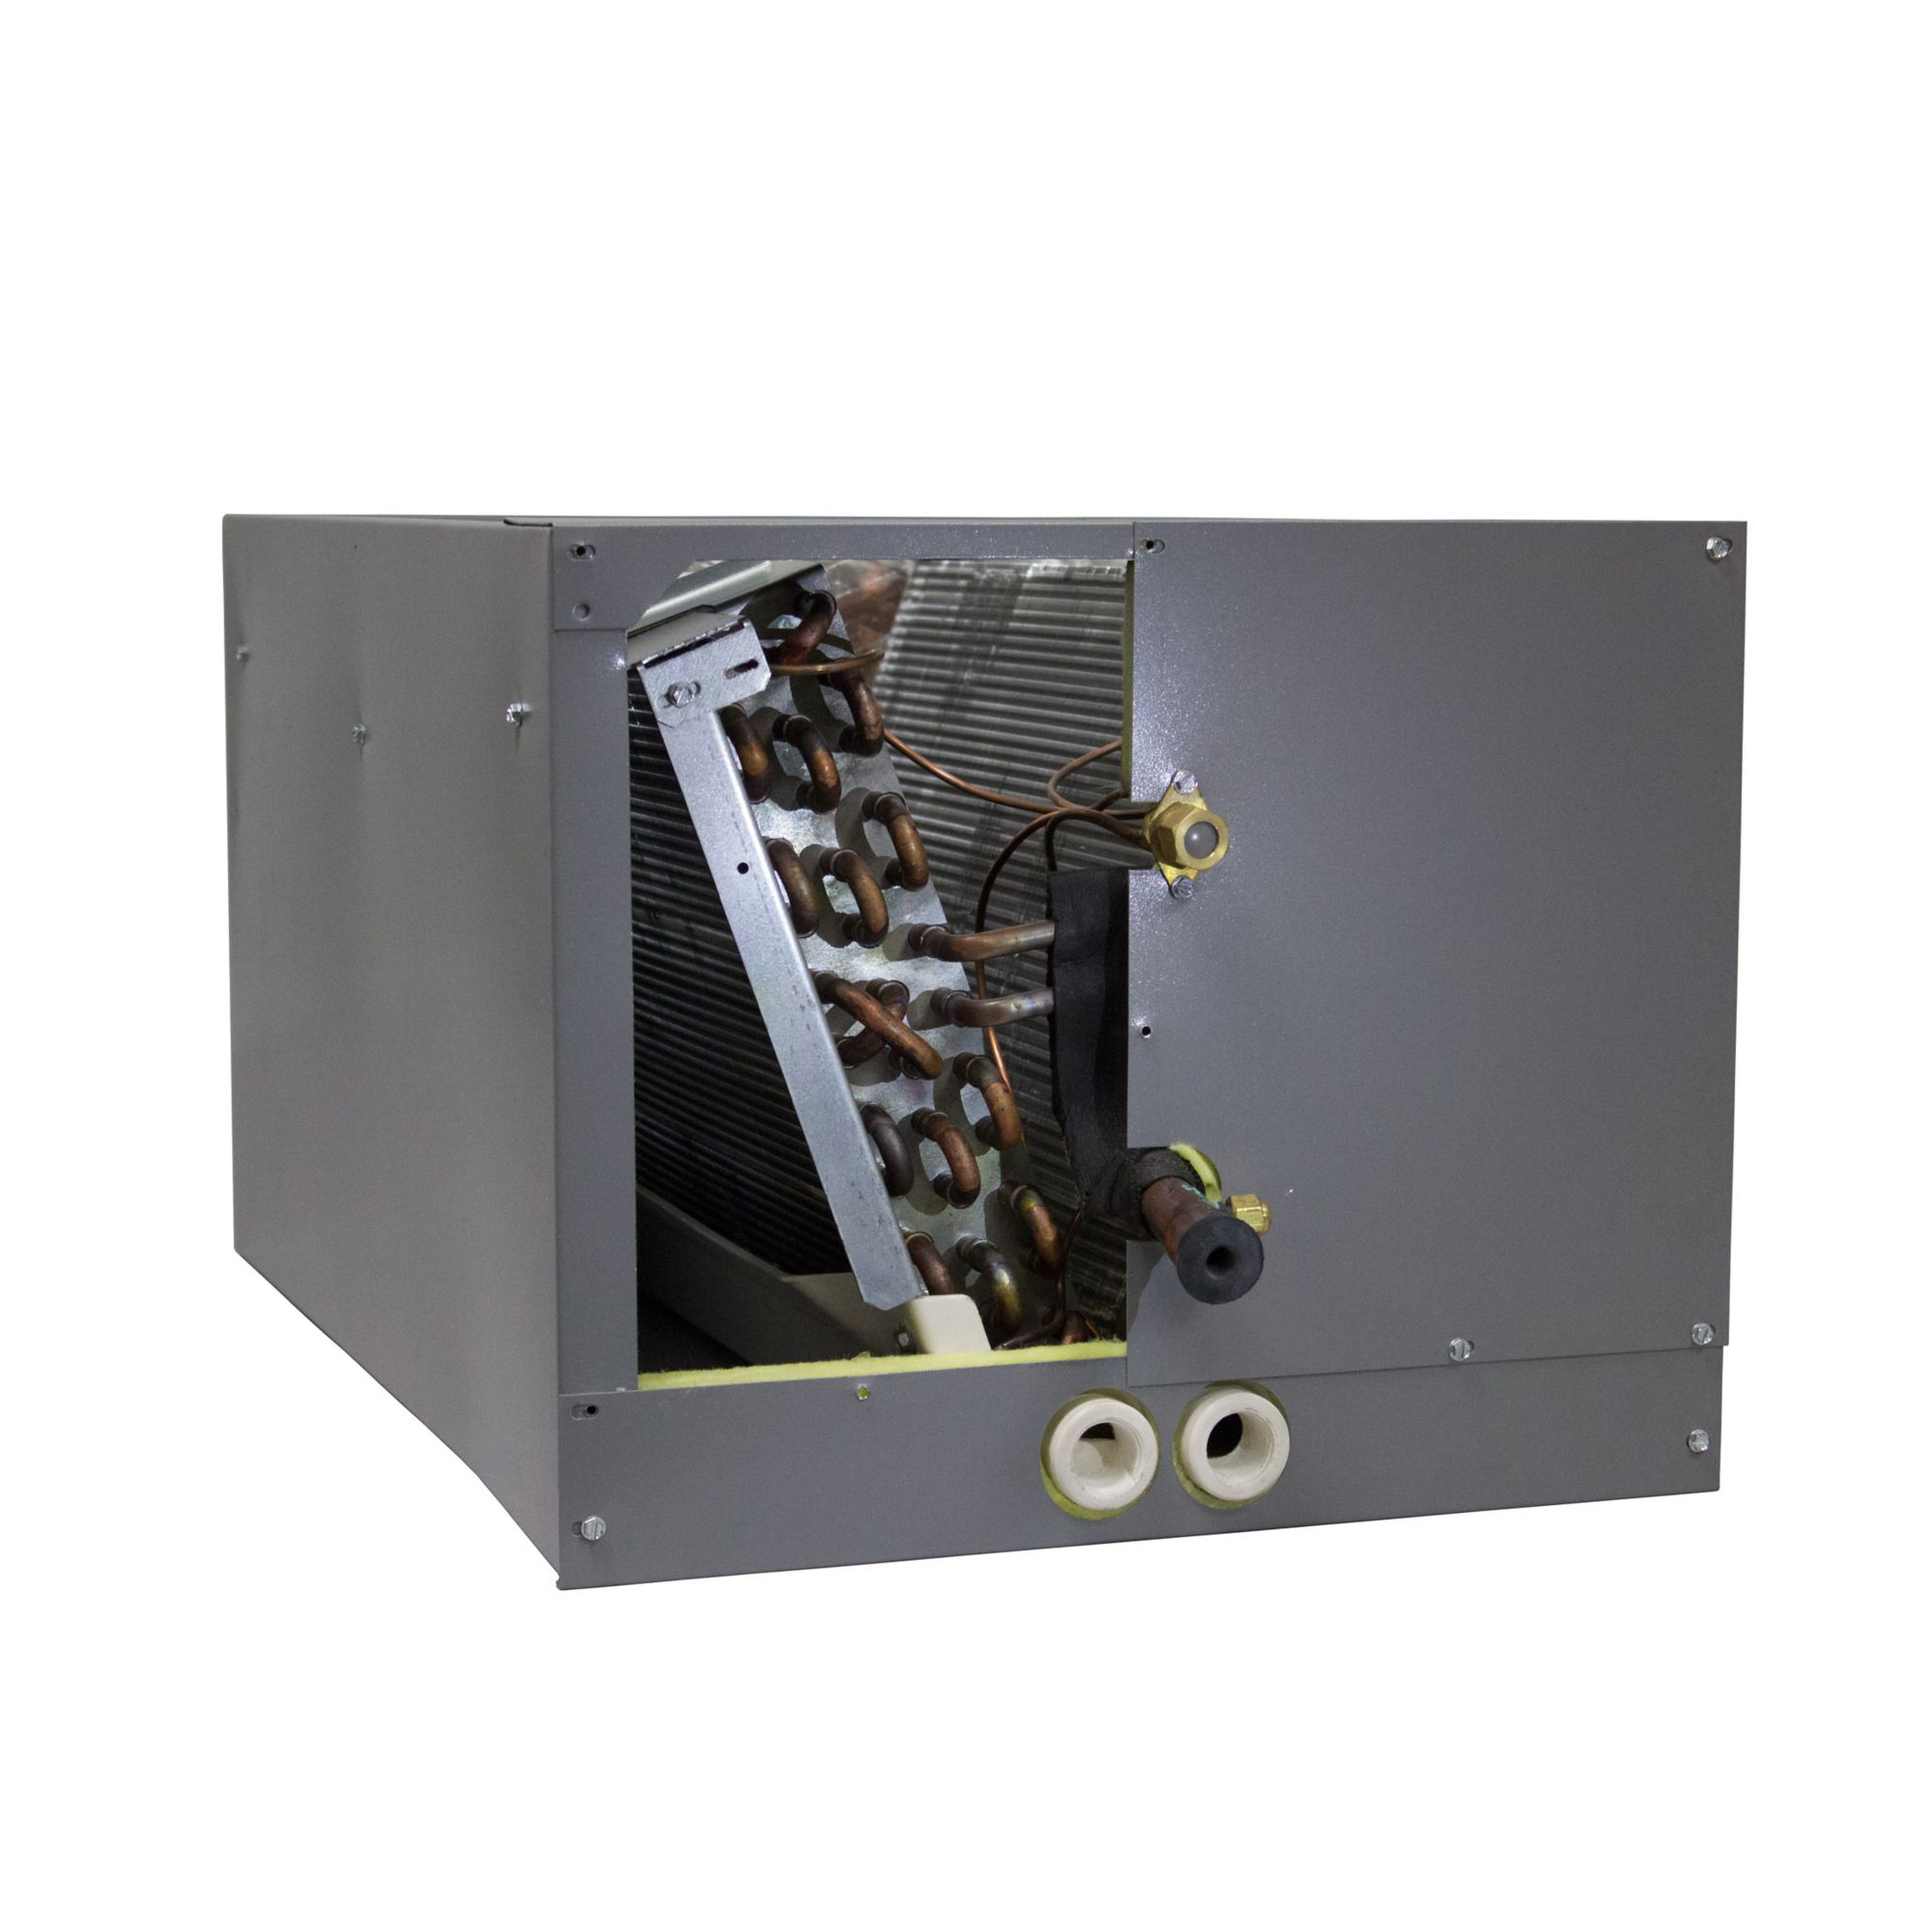 Allied™ 1.911484 1 Series Evaporator Coil, 4 ton Nominal, Downflow Air Flow, Cased Enclosure, R-22/R-410A Refrigerant